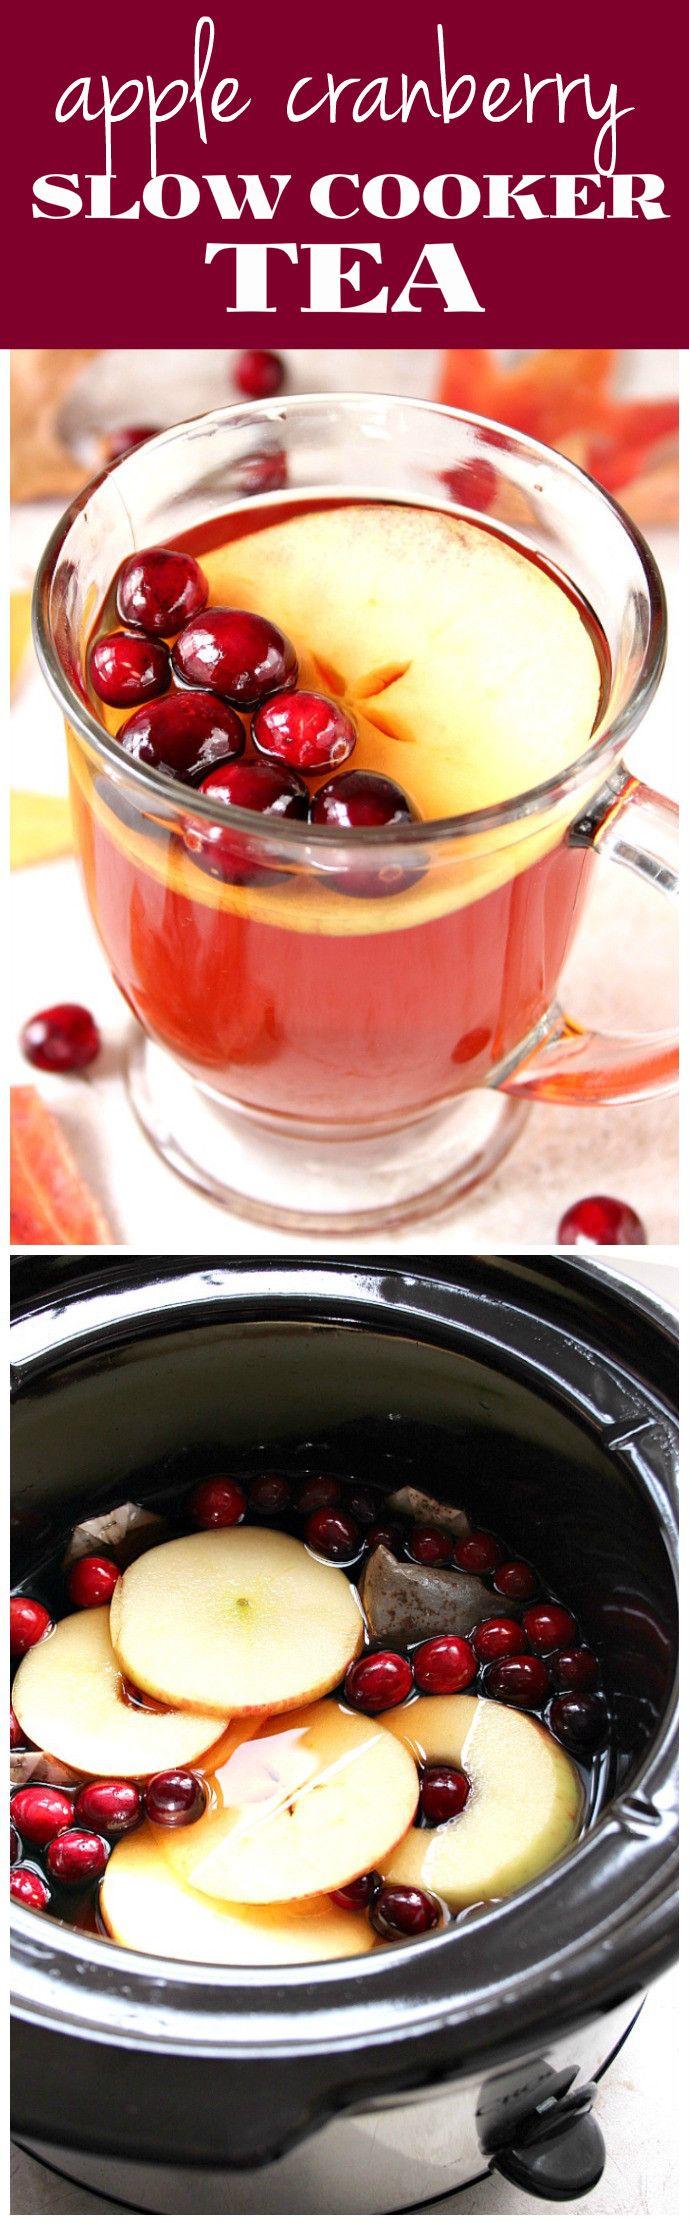 Wedding - Apple Cranberry Slow Cooker Tea